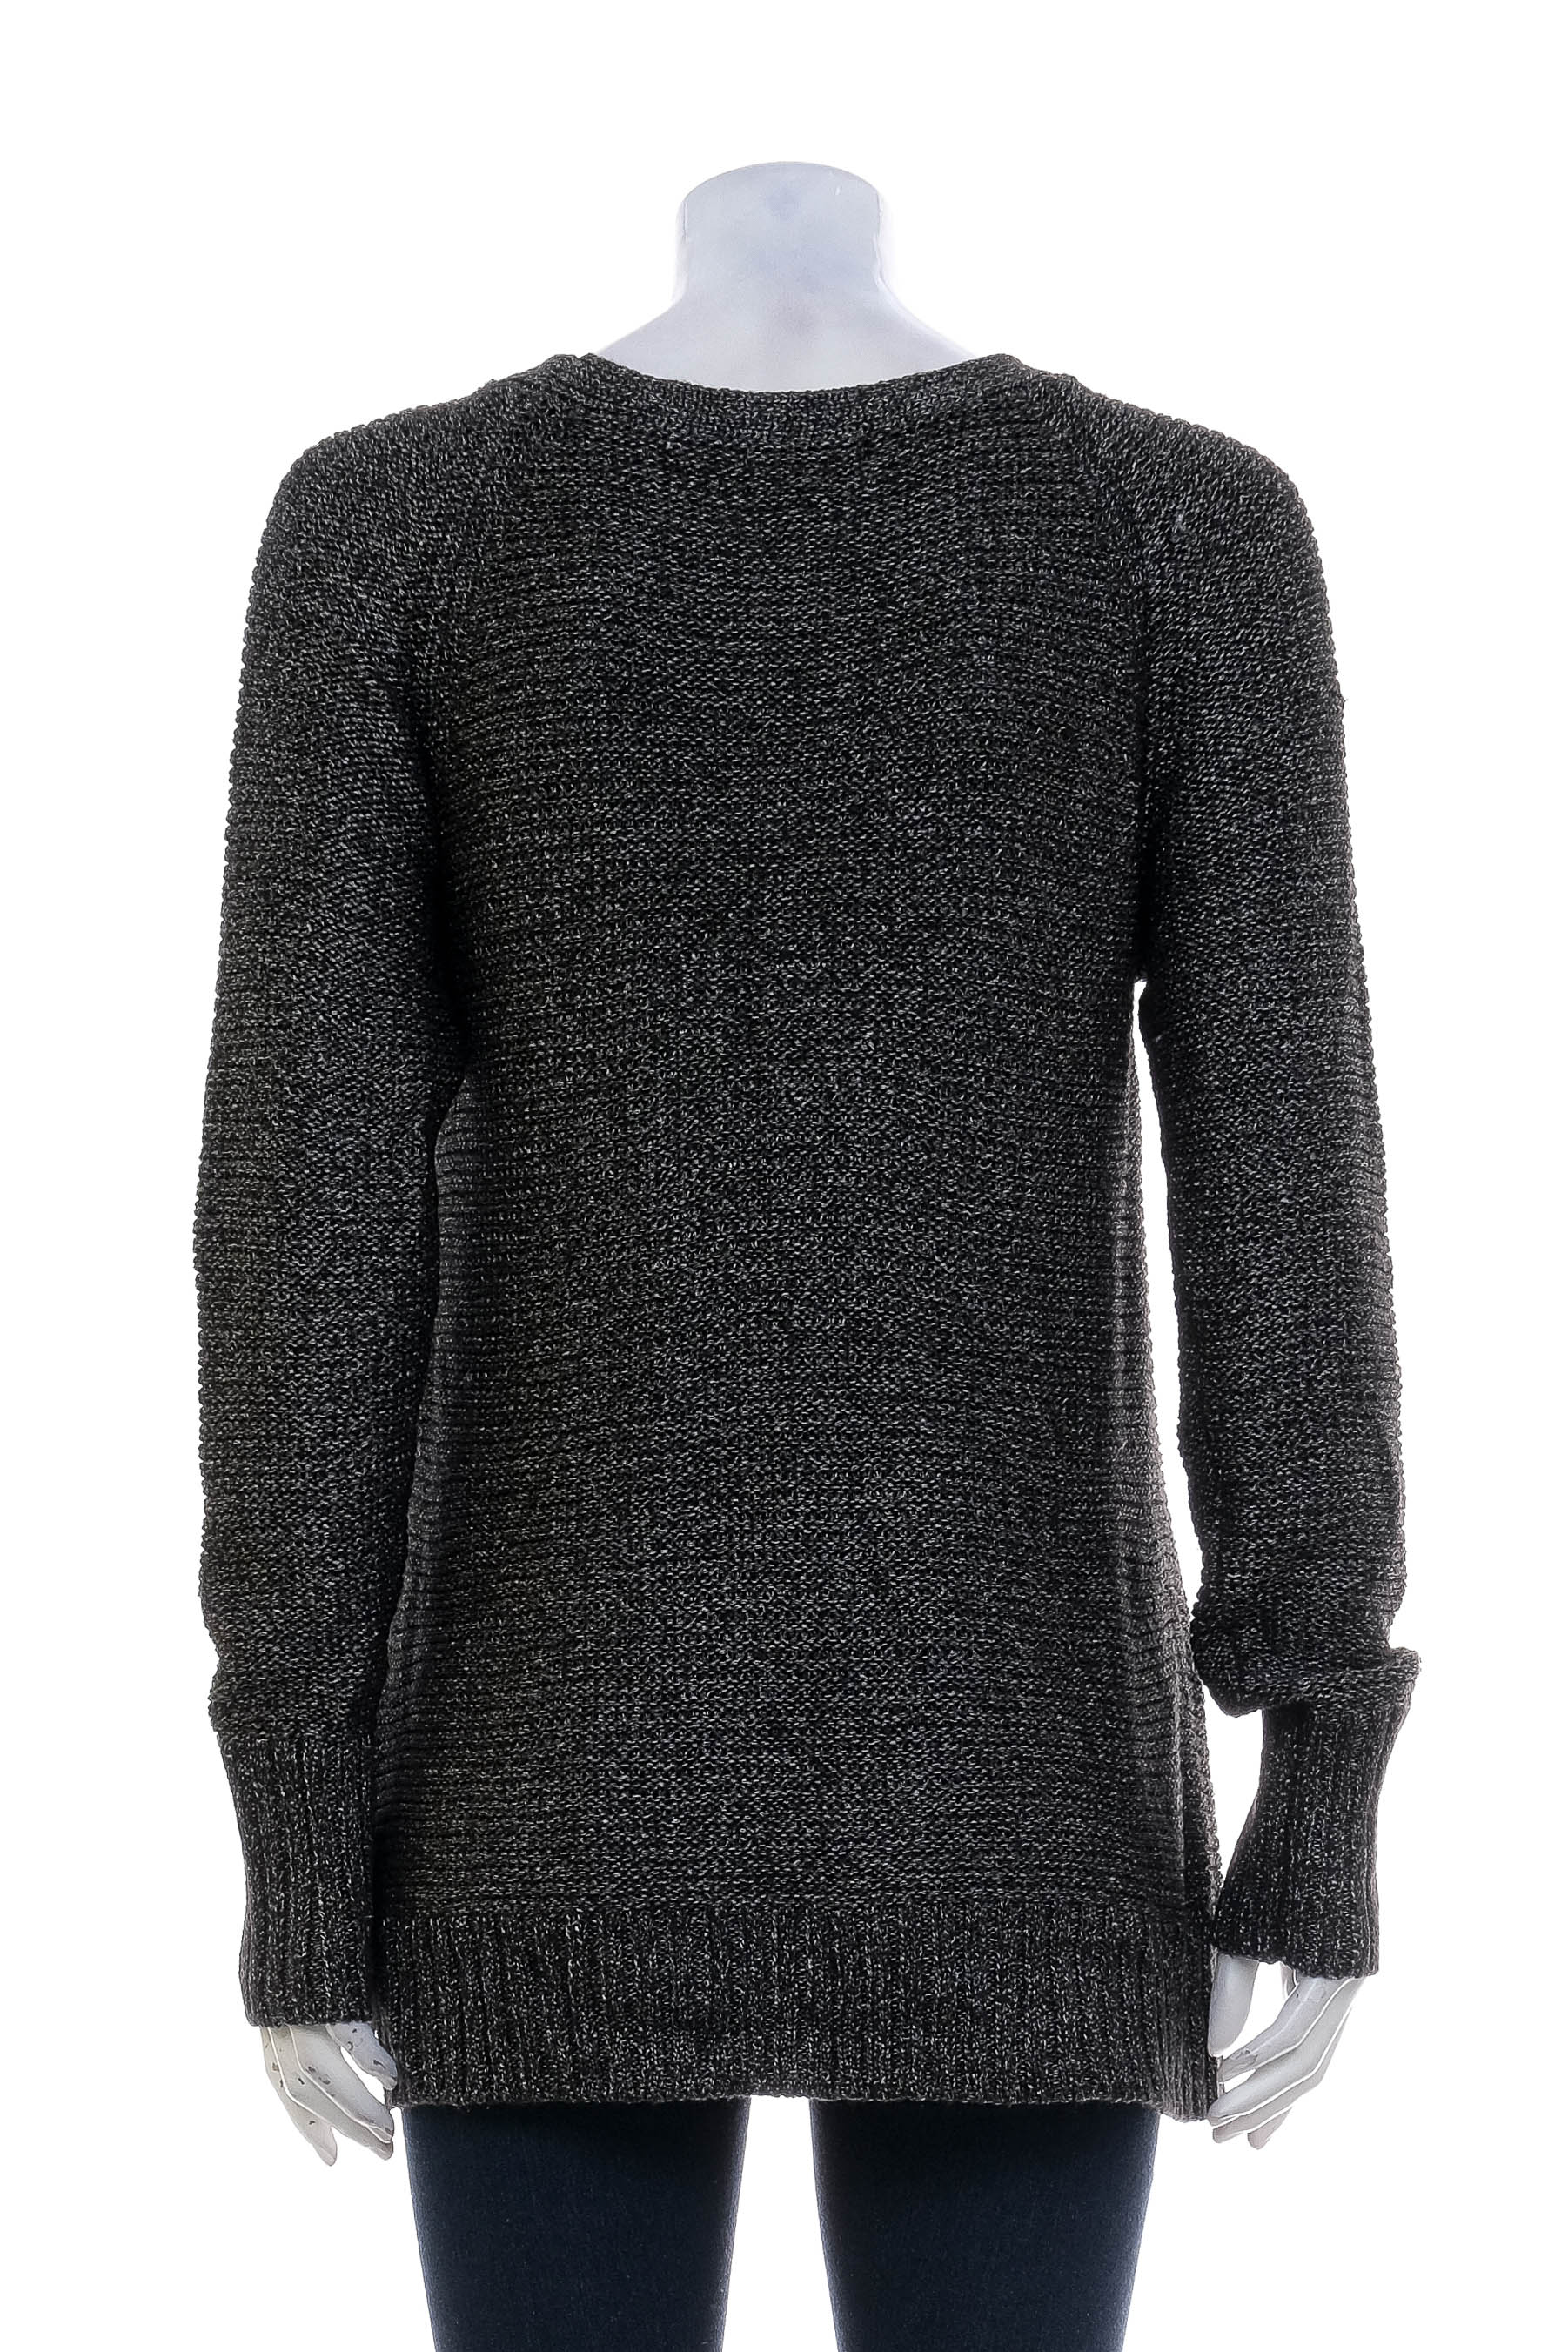 Women's sweater - Calvin Klein - 1